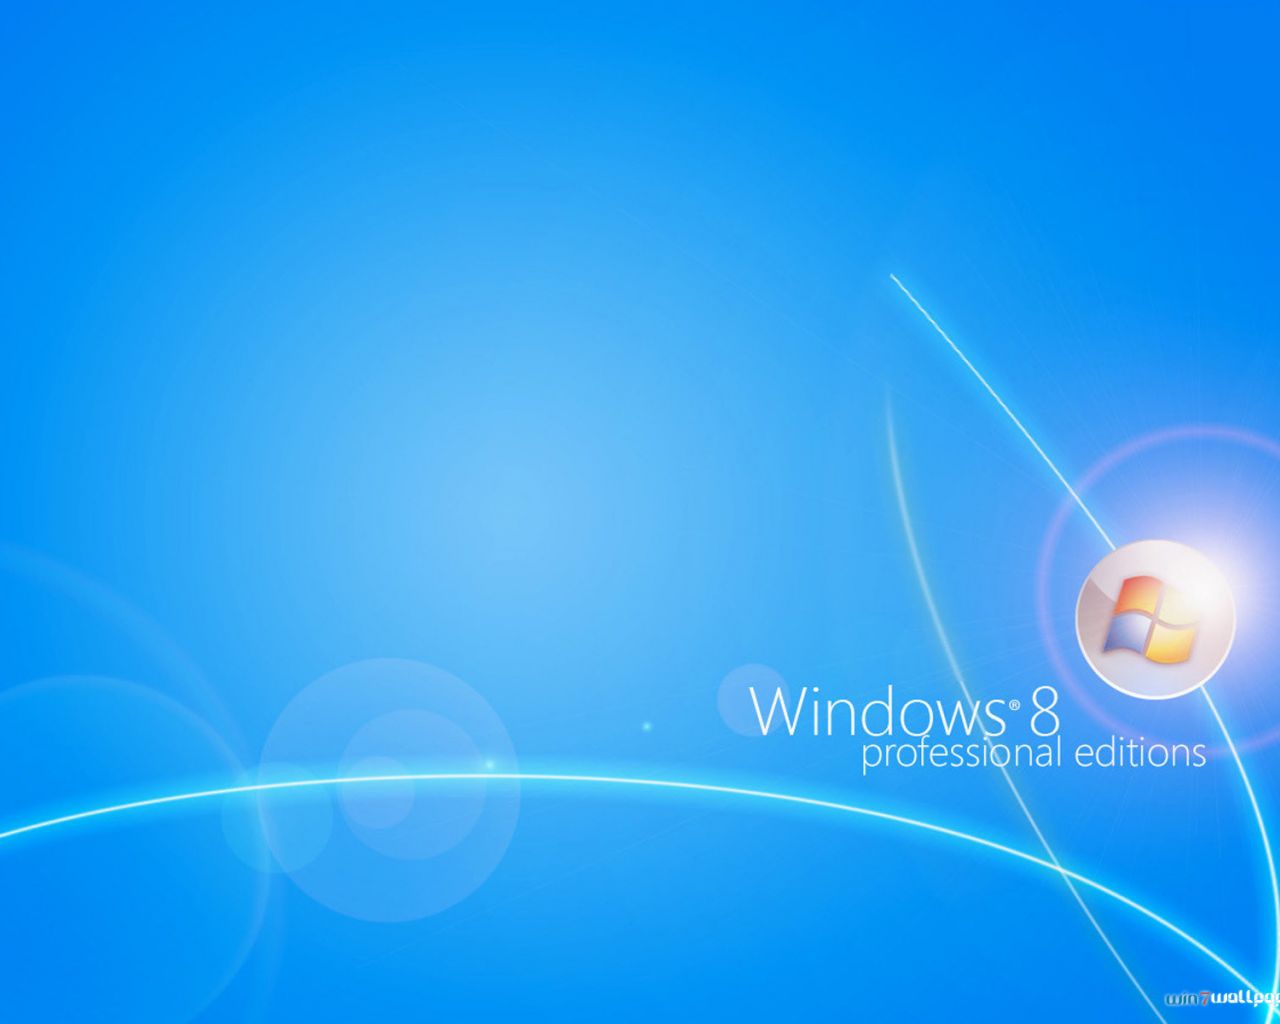 Windows Professional Edition Wallpaper In